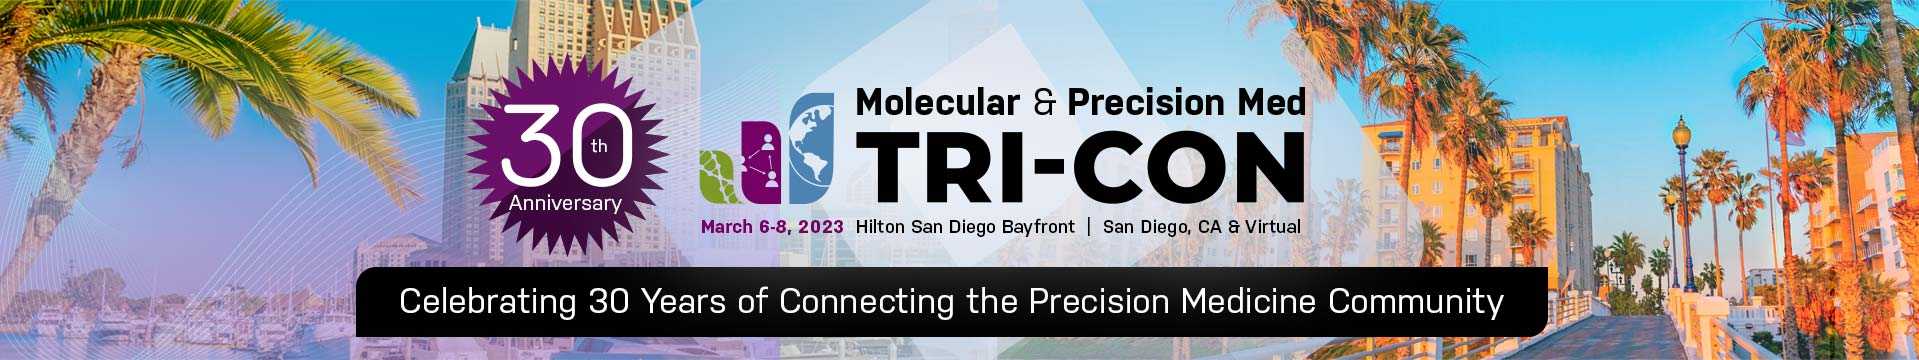 Molecular & Precision Med - TRI-CON 2023, San Diego, California, United States